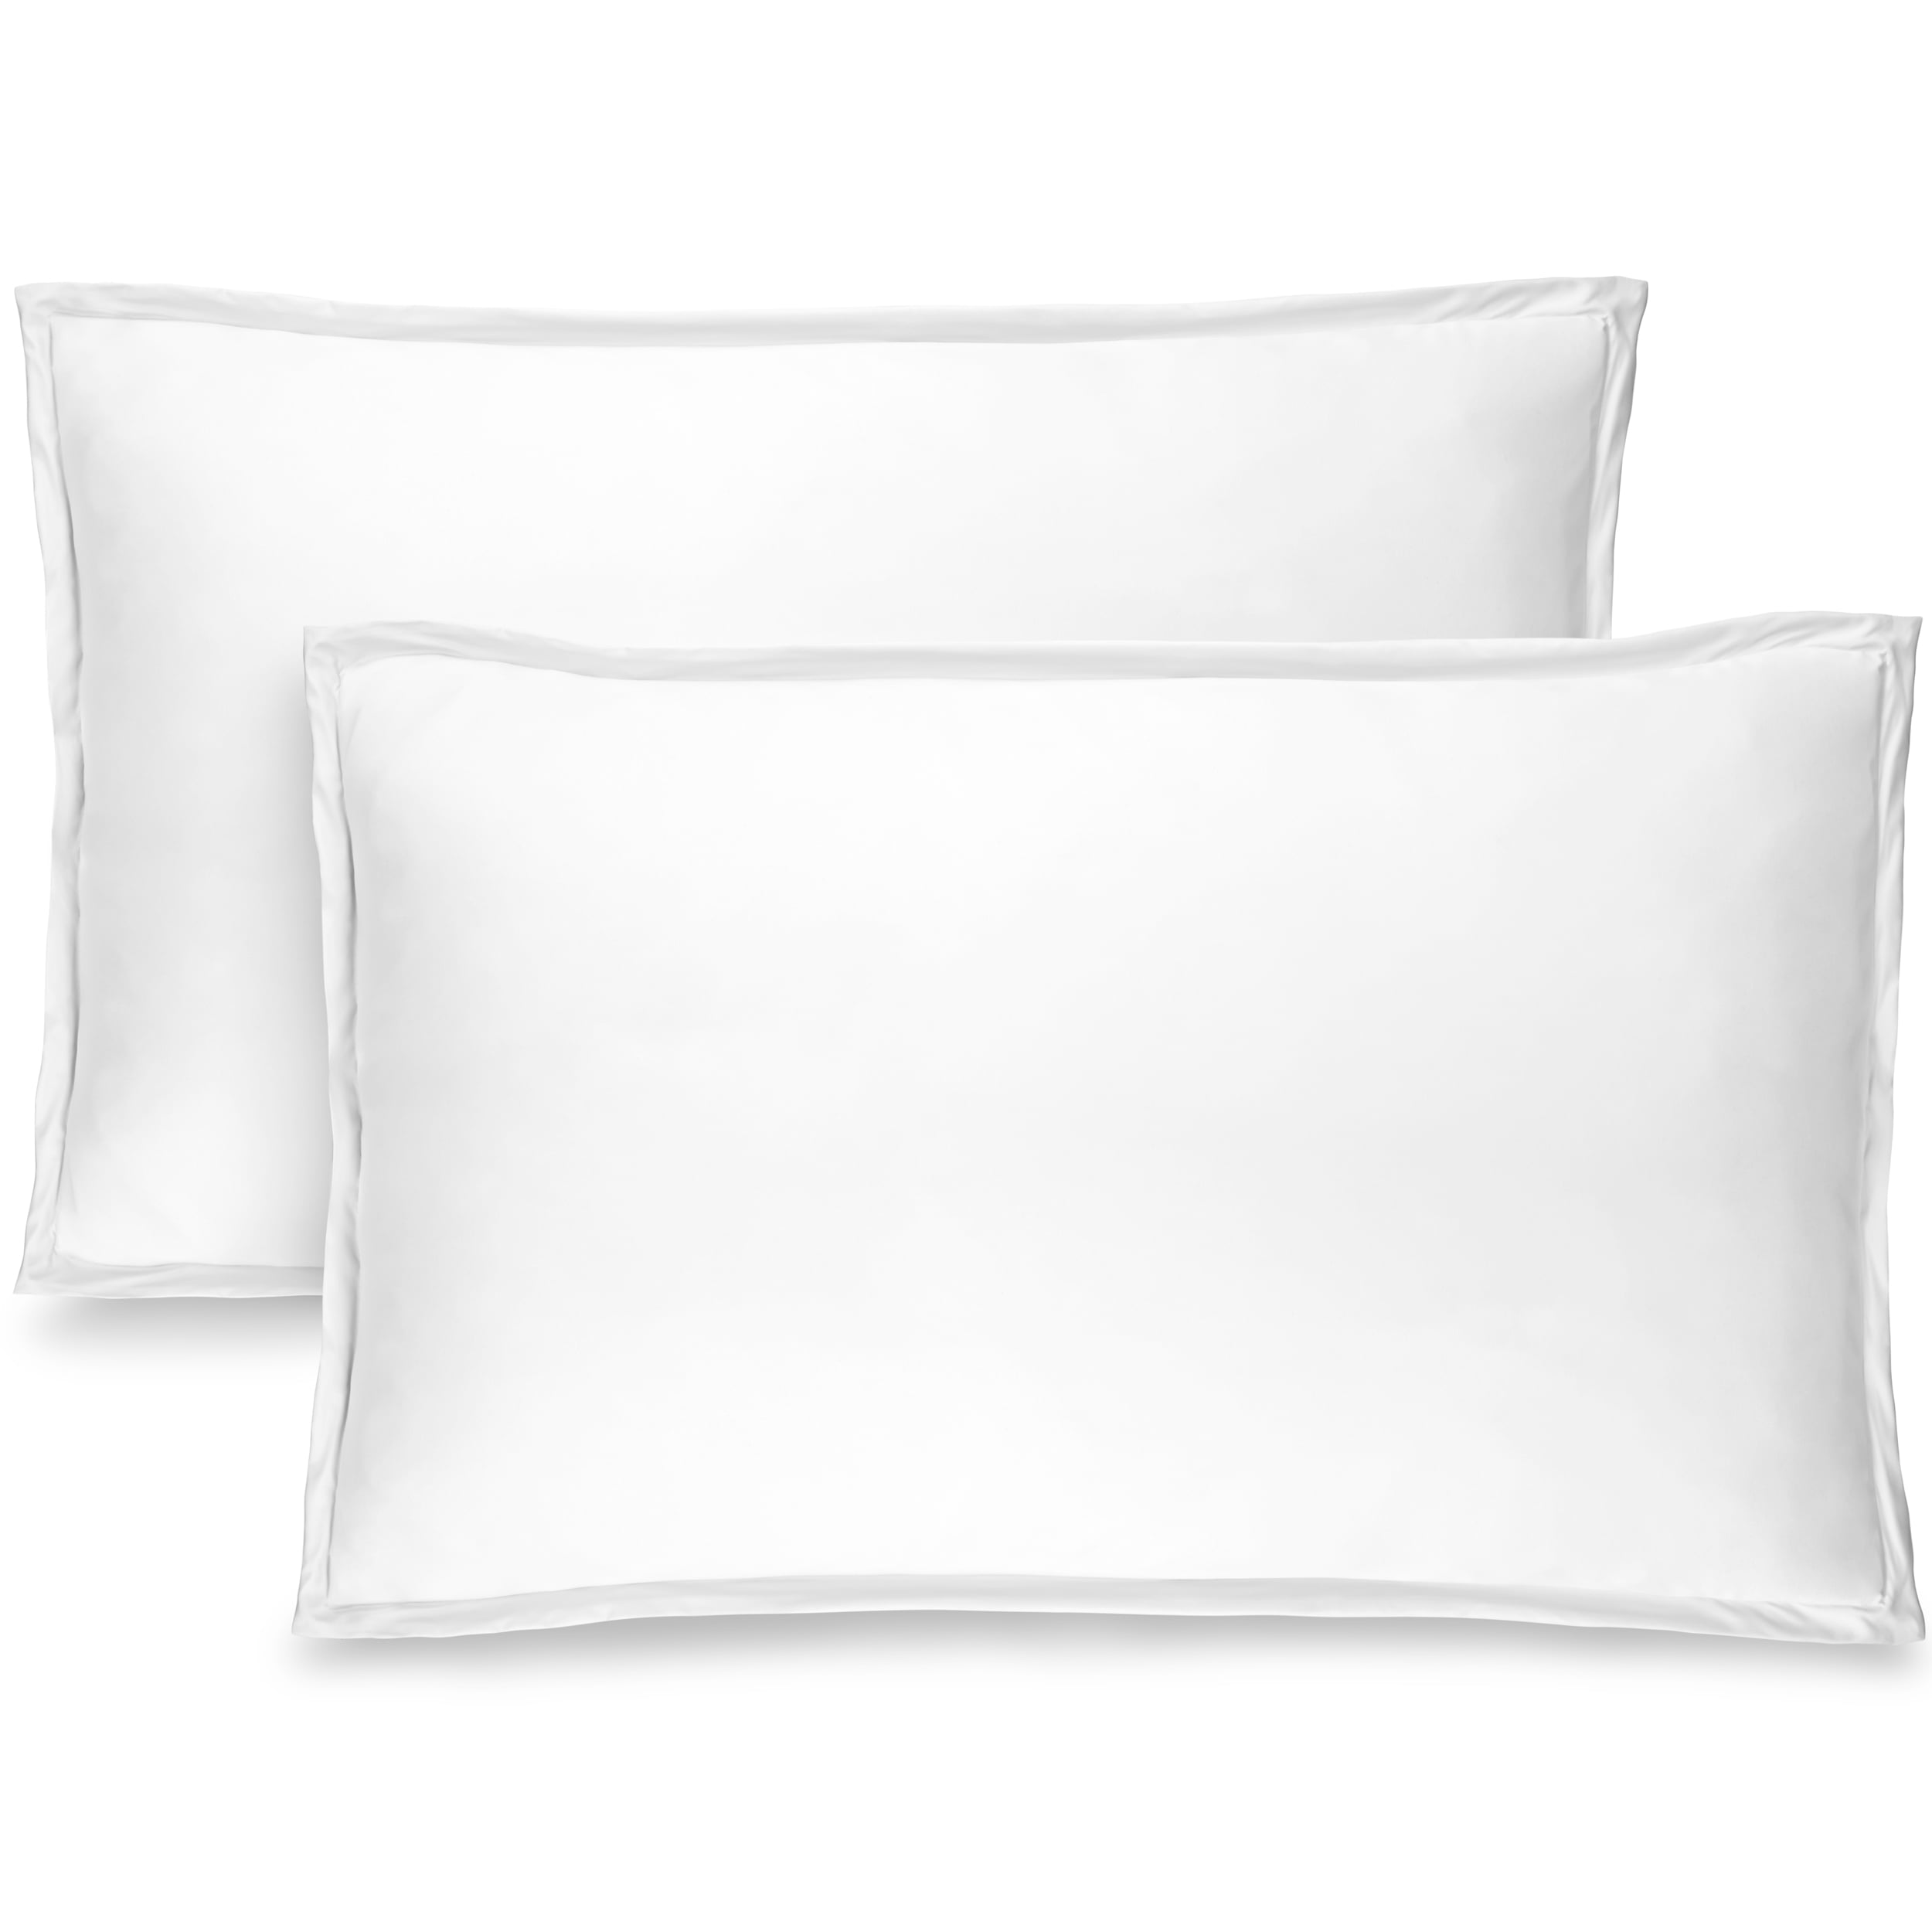 King Pillow Sham Set of 2, Sand Bare Home King Pillow Shams Premium 1800 Ultra-Soft Microfiber Set of 2 Bed Pillow Shams Double Brushed